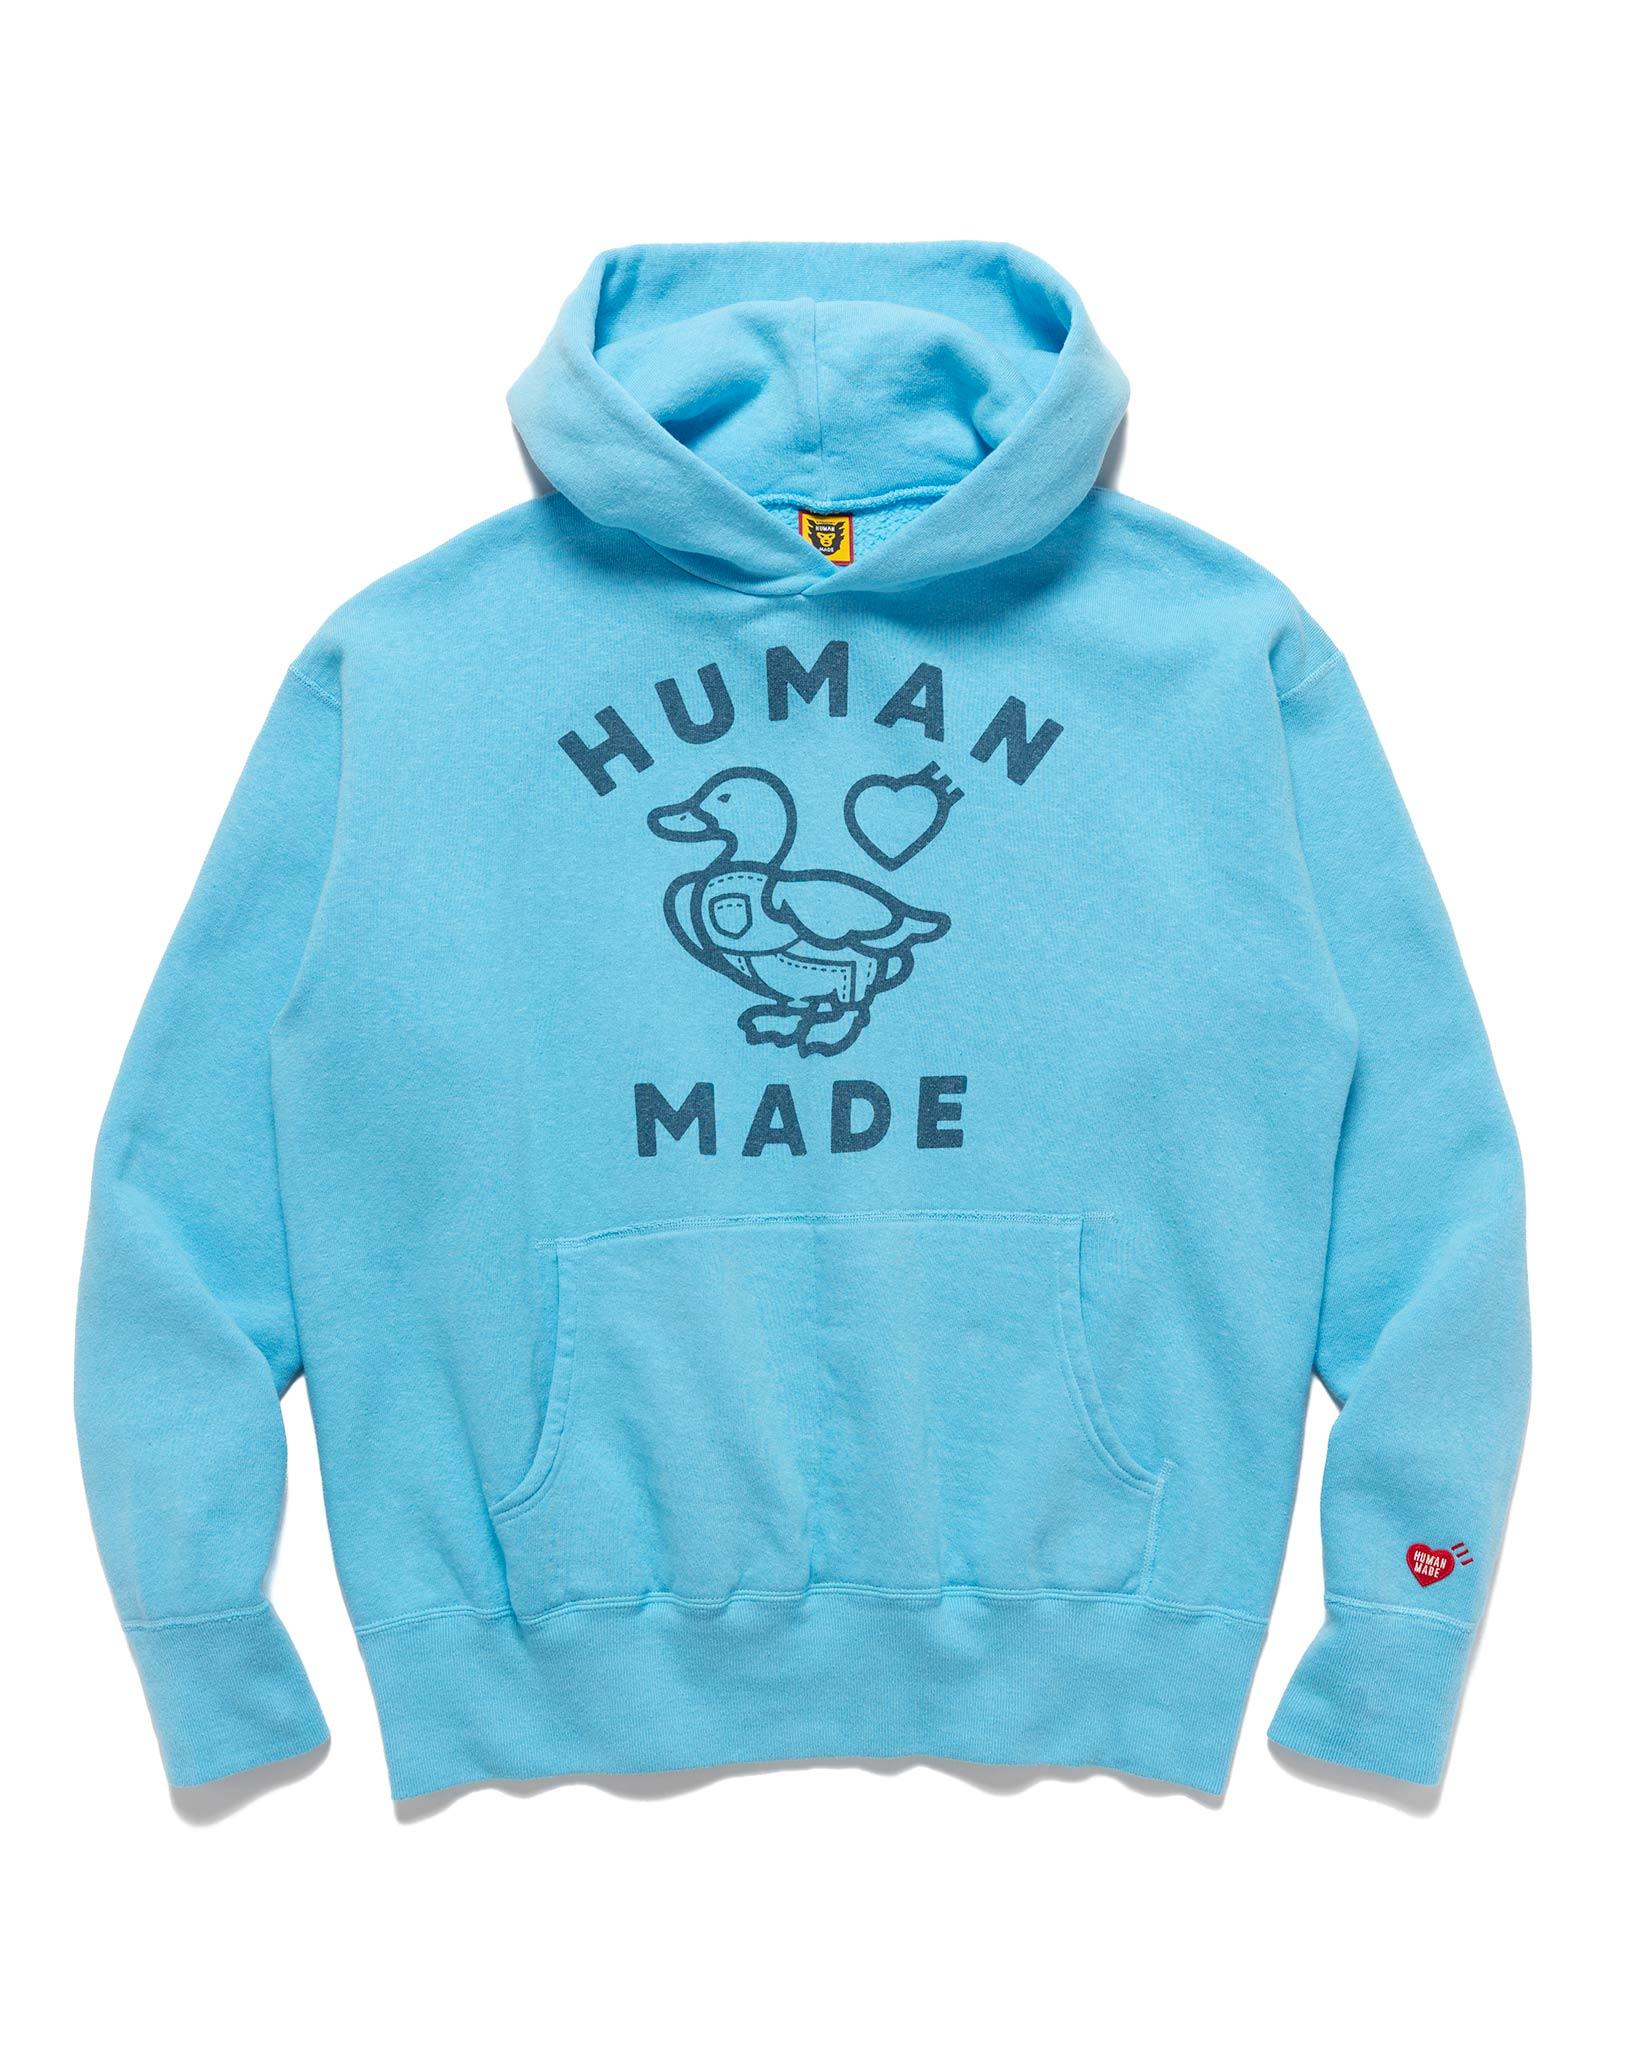 Human Made Tsuriami Hoodie Blue | HAVEN